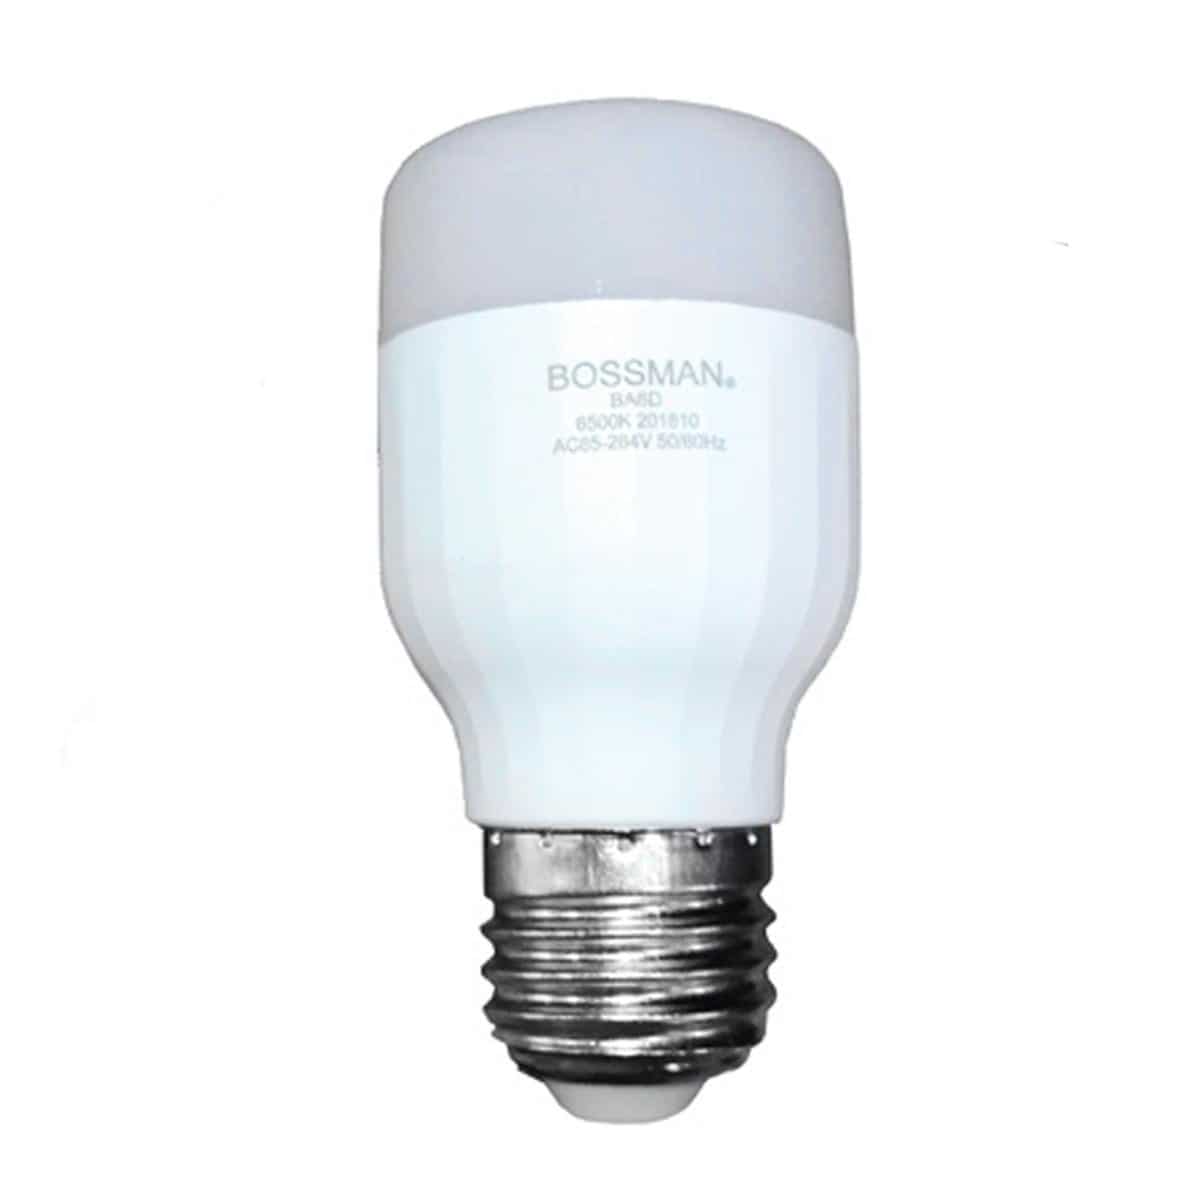 BOSSMAN LED Light Bulb BA6D